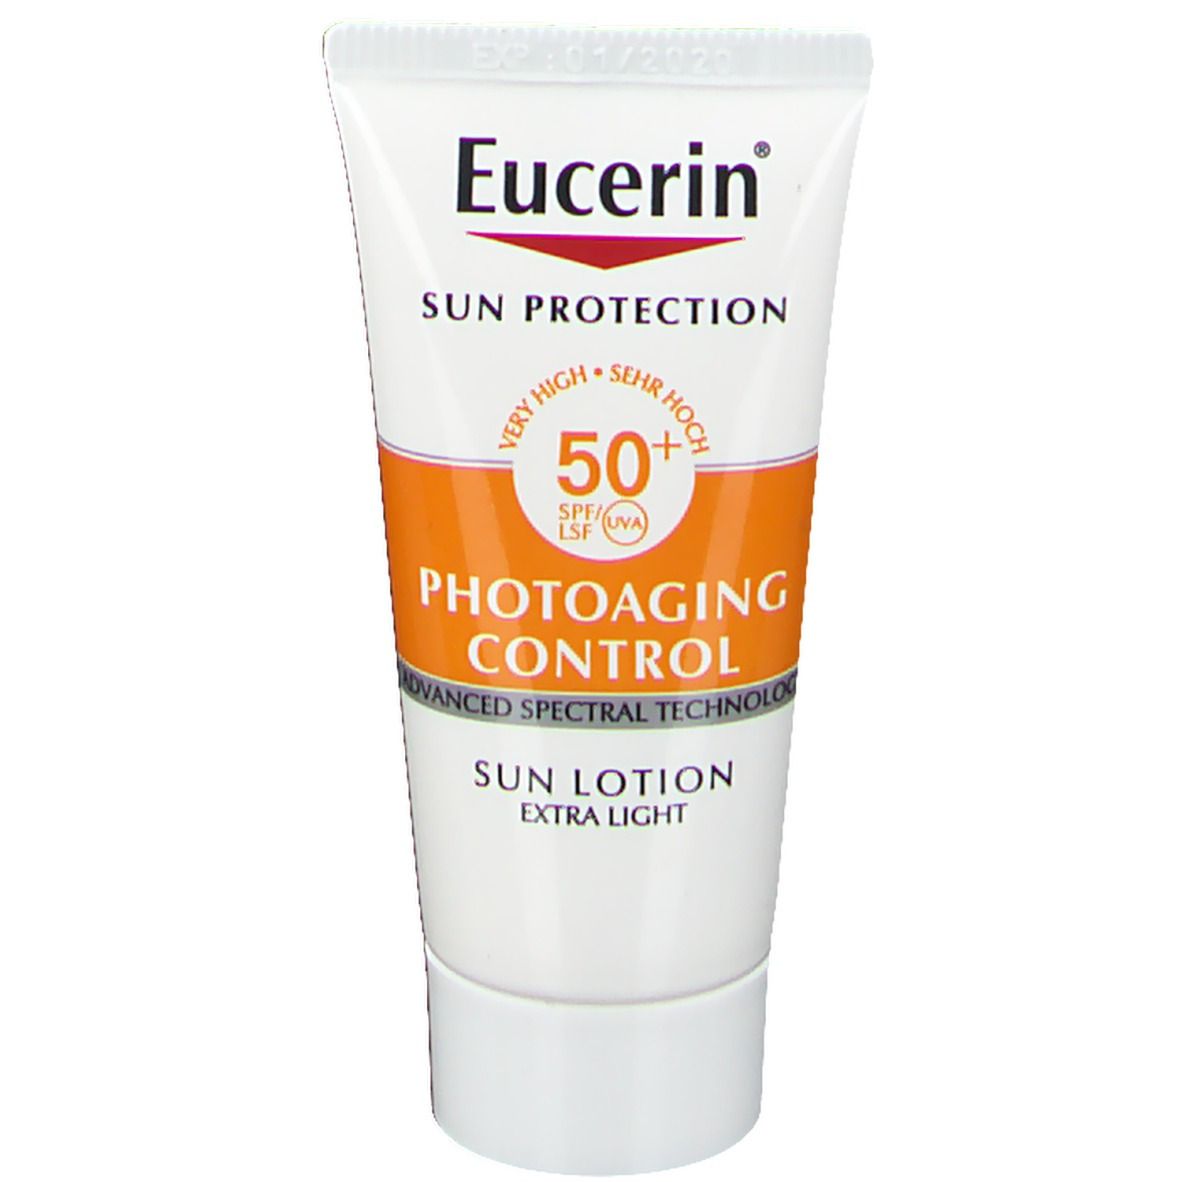 Eucerin® Photoaging Control Sun Lotion Extra Light SPF 50+